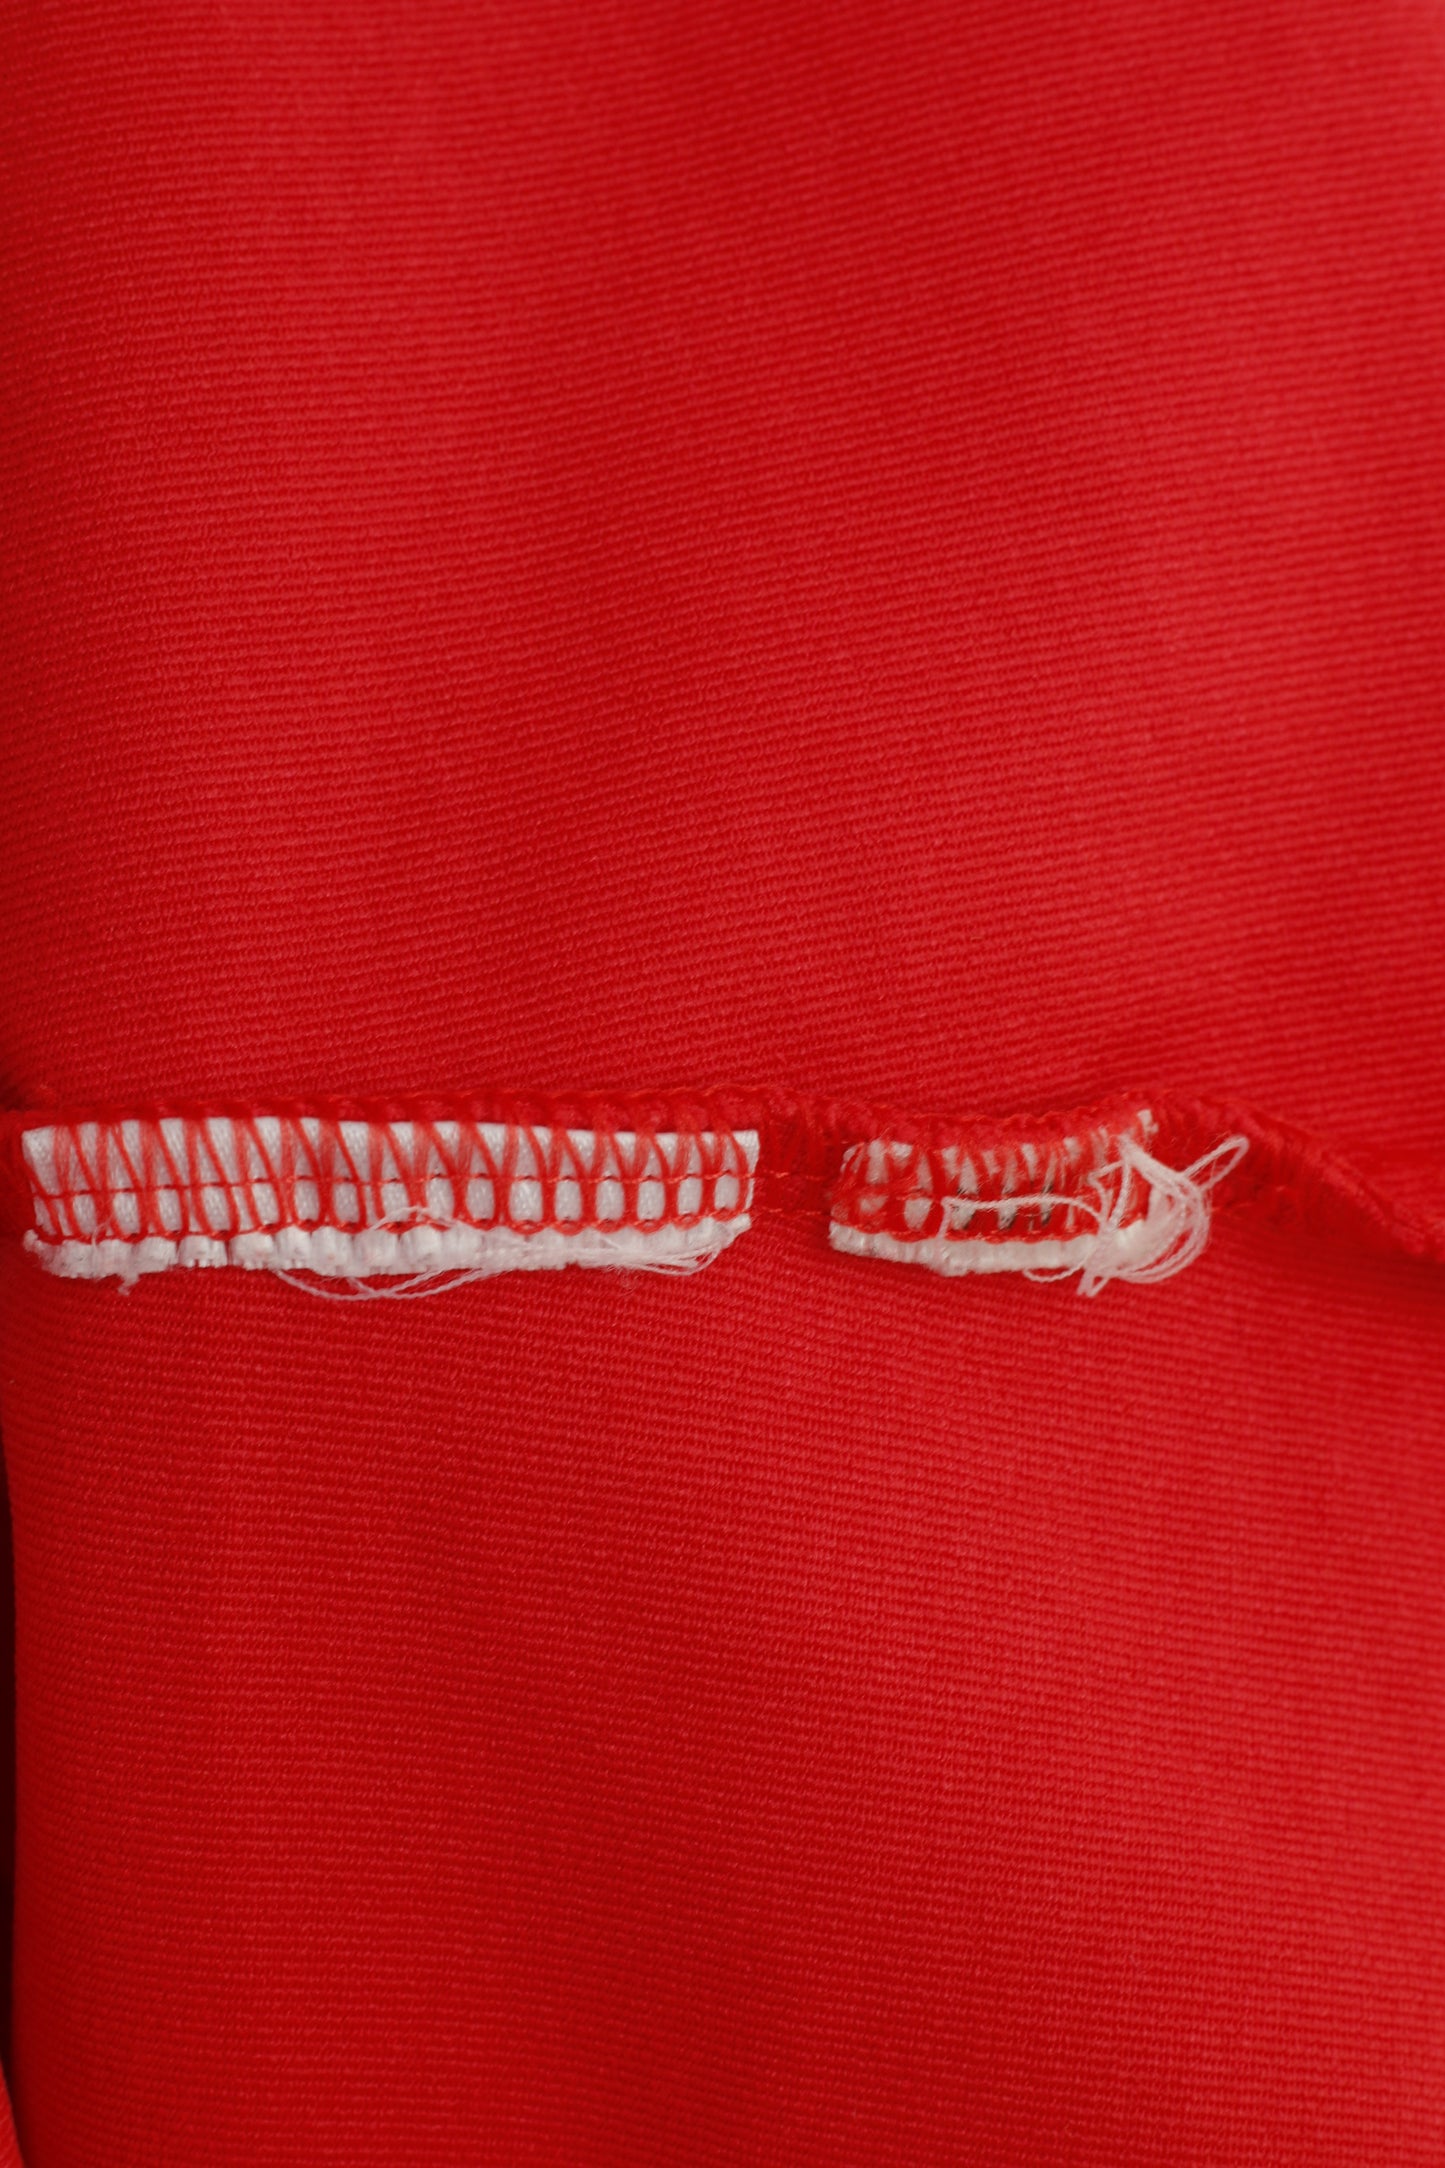 Adidas Woman 16 M T-Shirt V Neck Coral 3 Stripes Short Sleeve Stretch Vintage Top